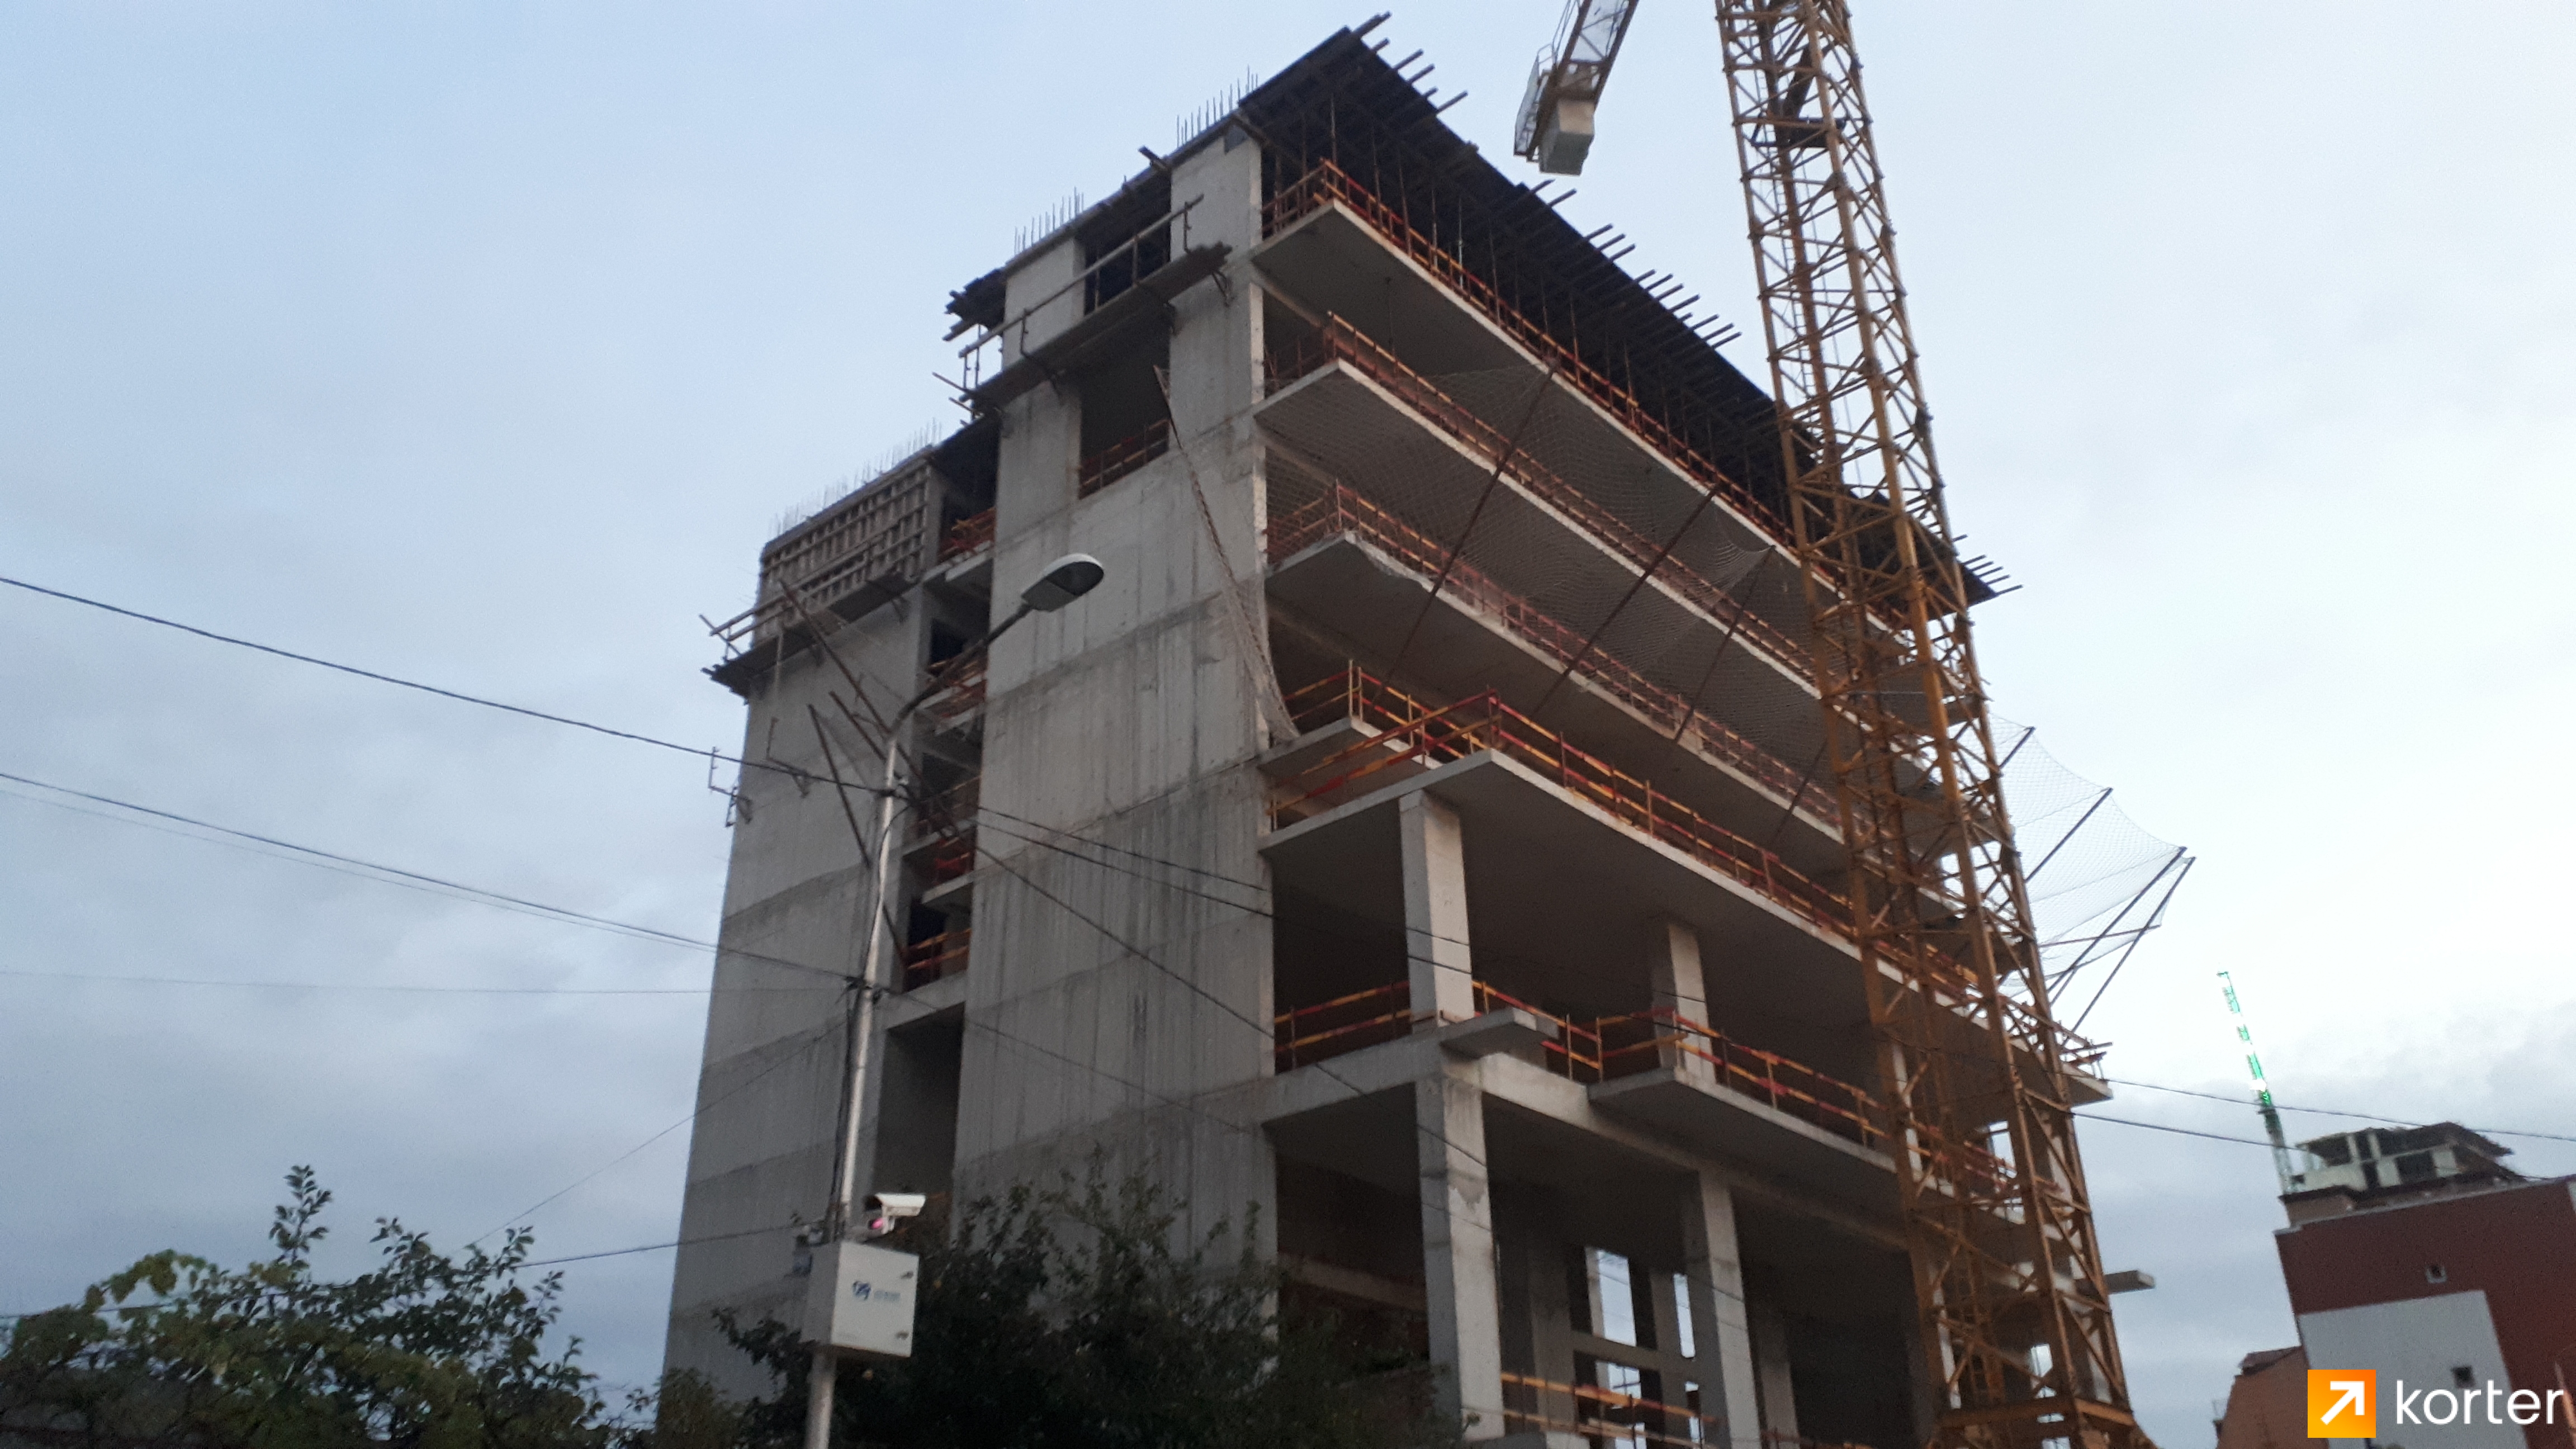 Construction progress Leon Towers - Angle 1, September 2020